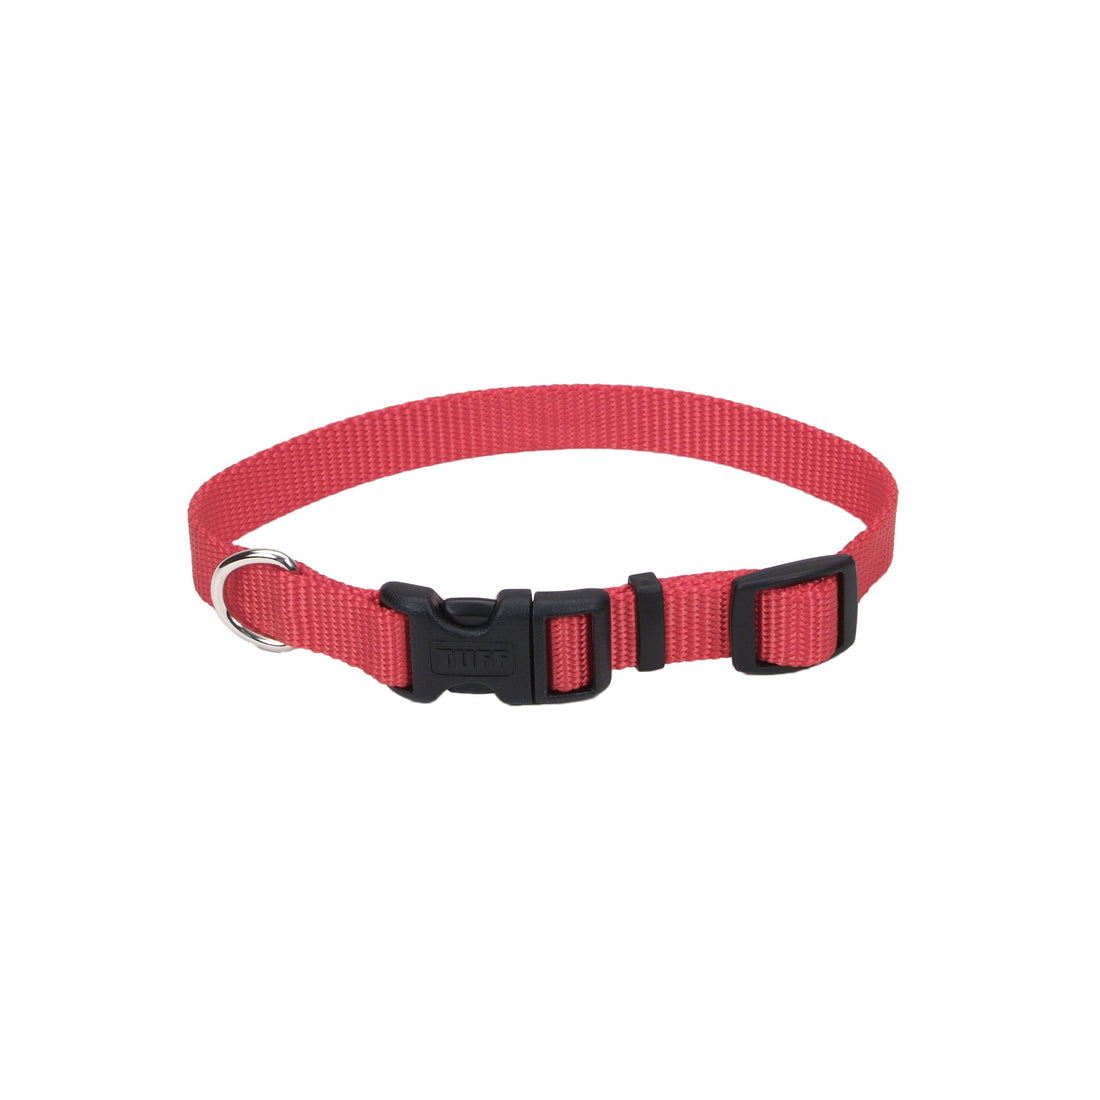 Coastal Adjustable Nylon Collar with Tuff Buckle Large Red